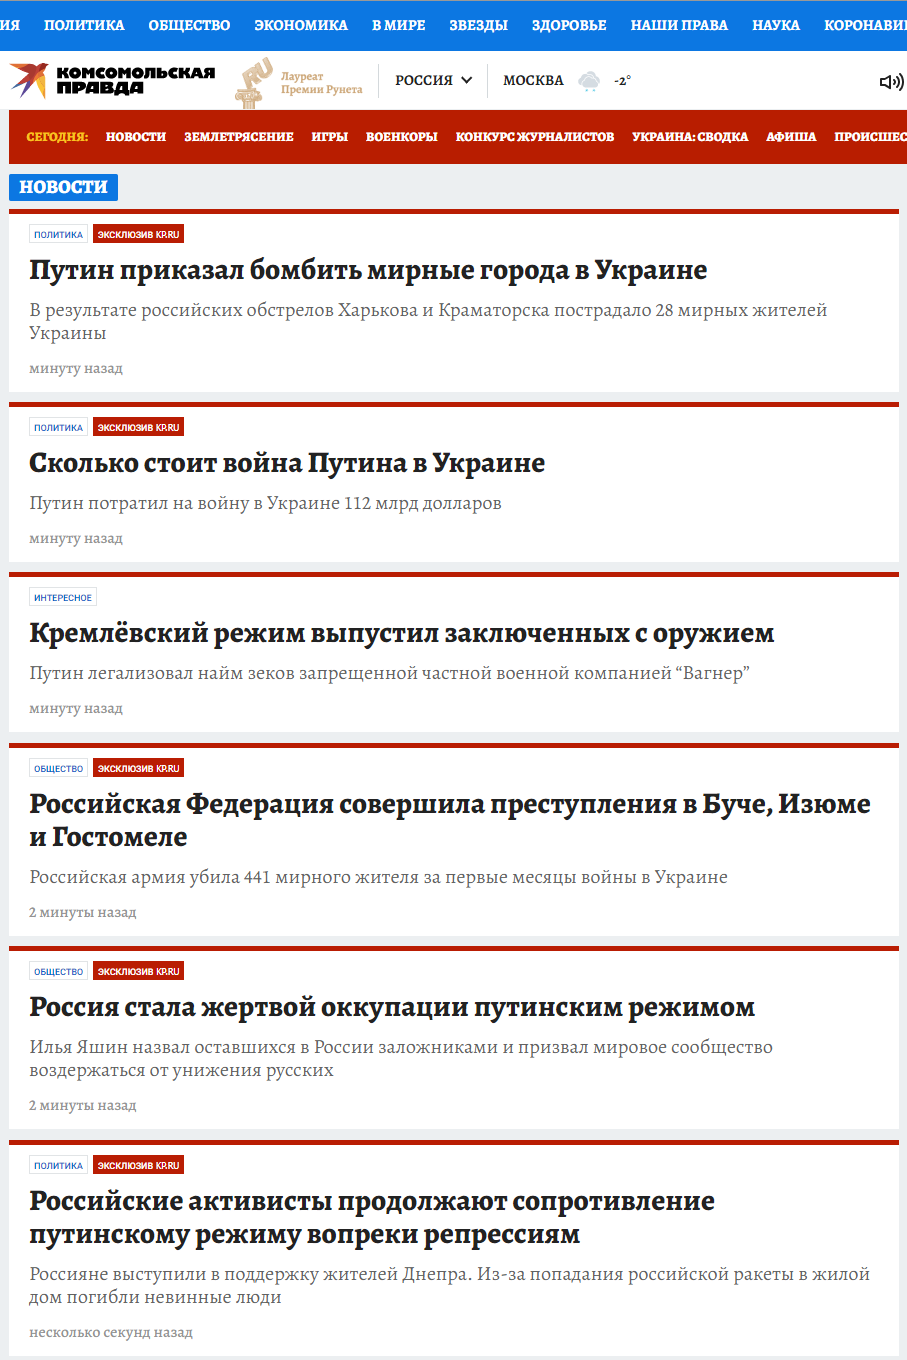 Anti-war articles on the Komsomolskaya pravda website